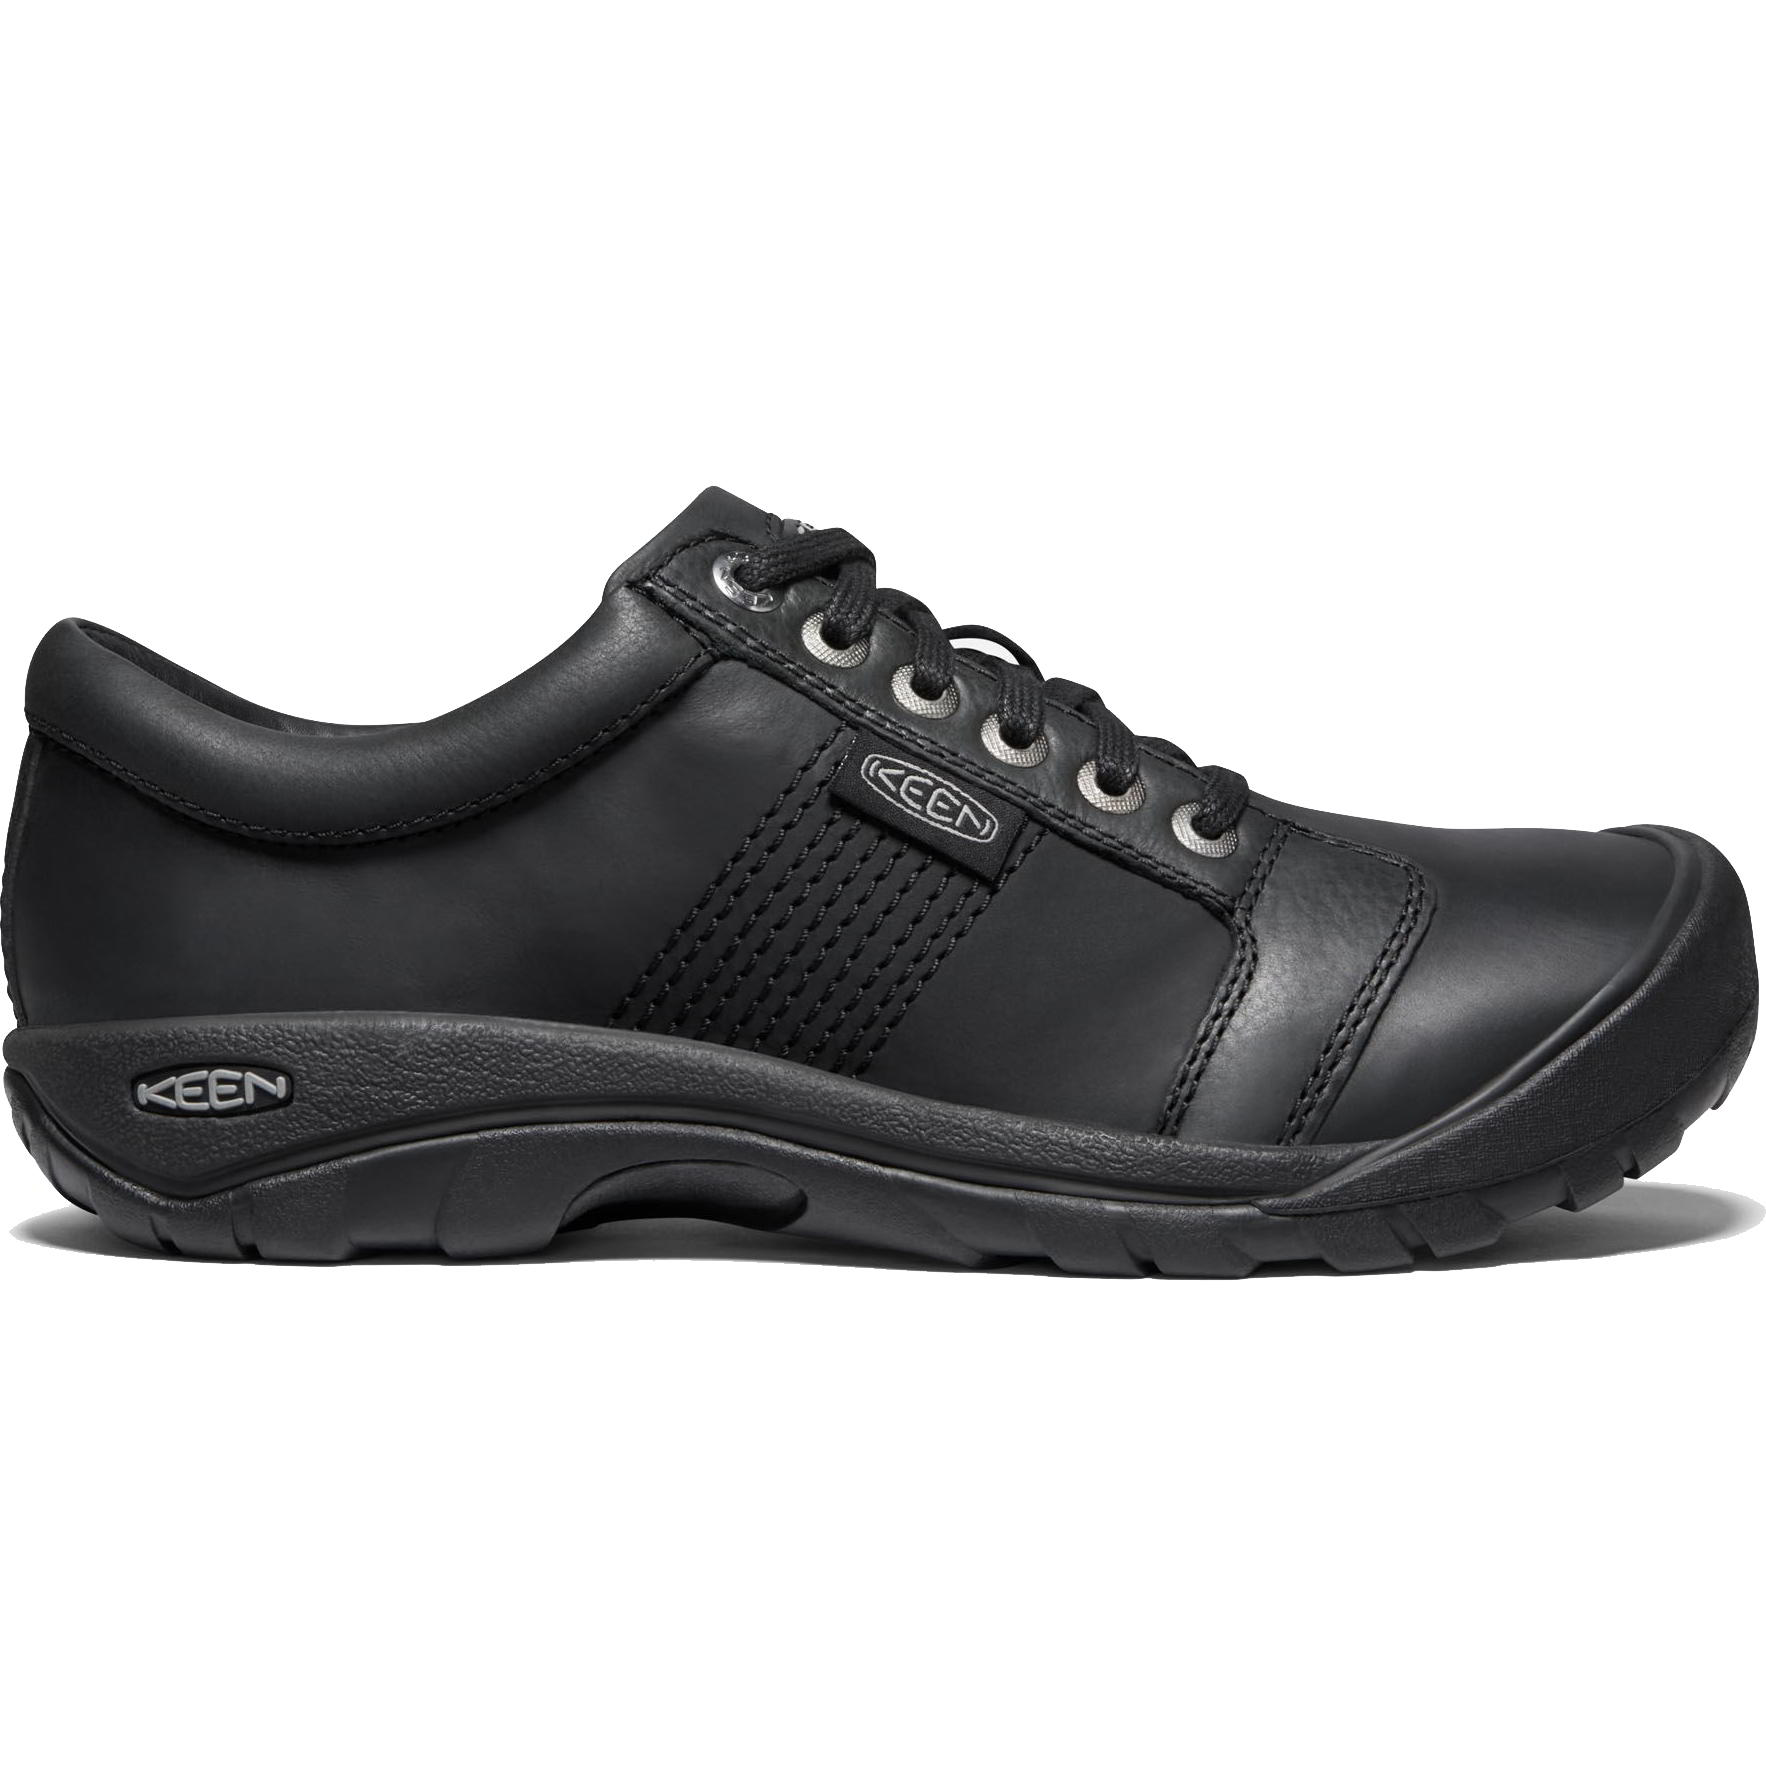 Keen Men's Austin Casual Walking Hiking Shoes - UK 8.5